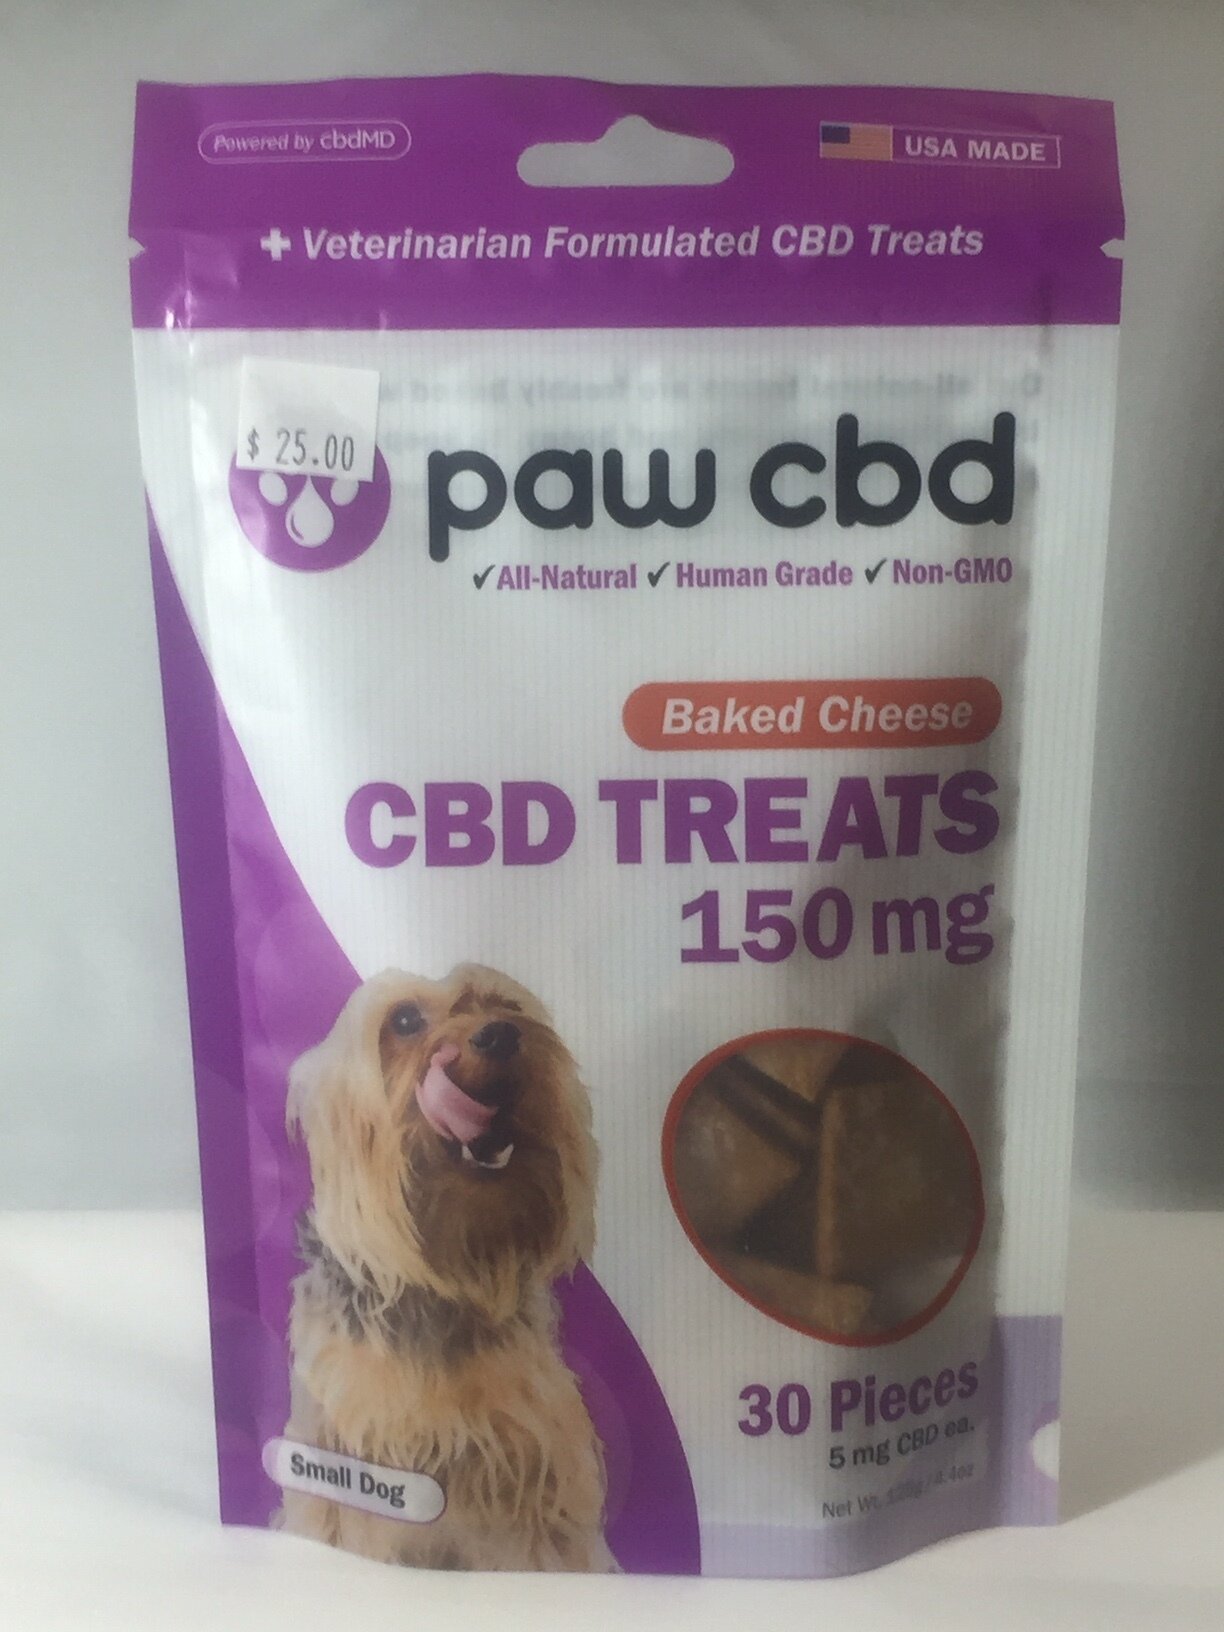 Paw CBD baked cheese cbd treats for dogs.JPG